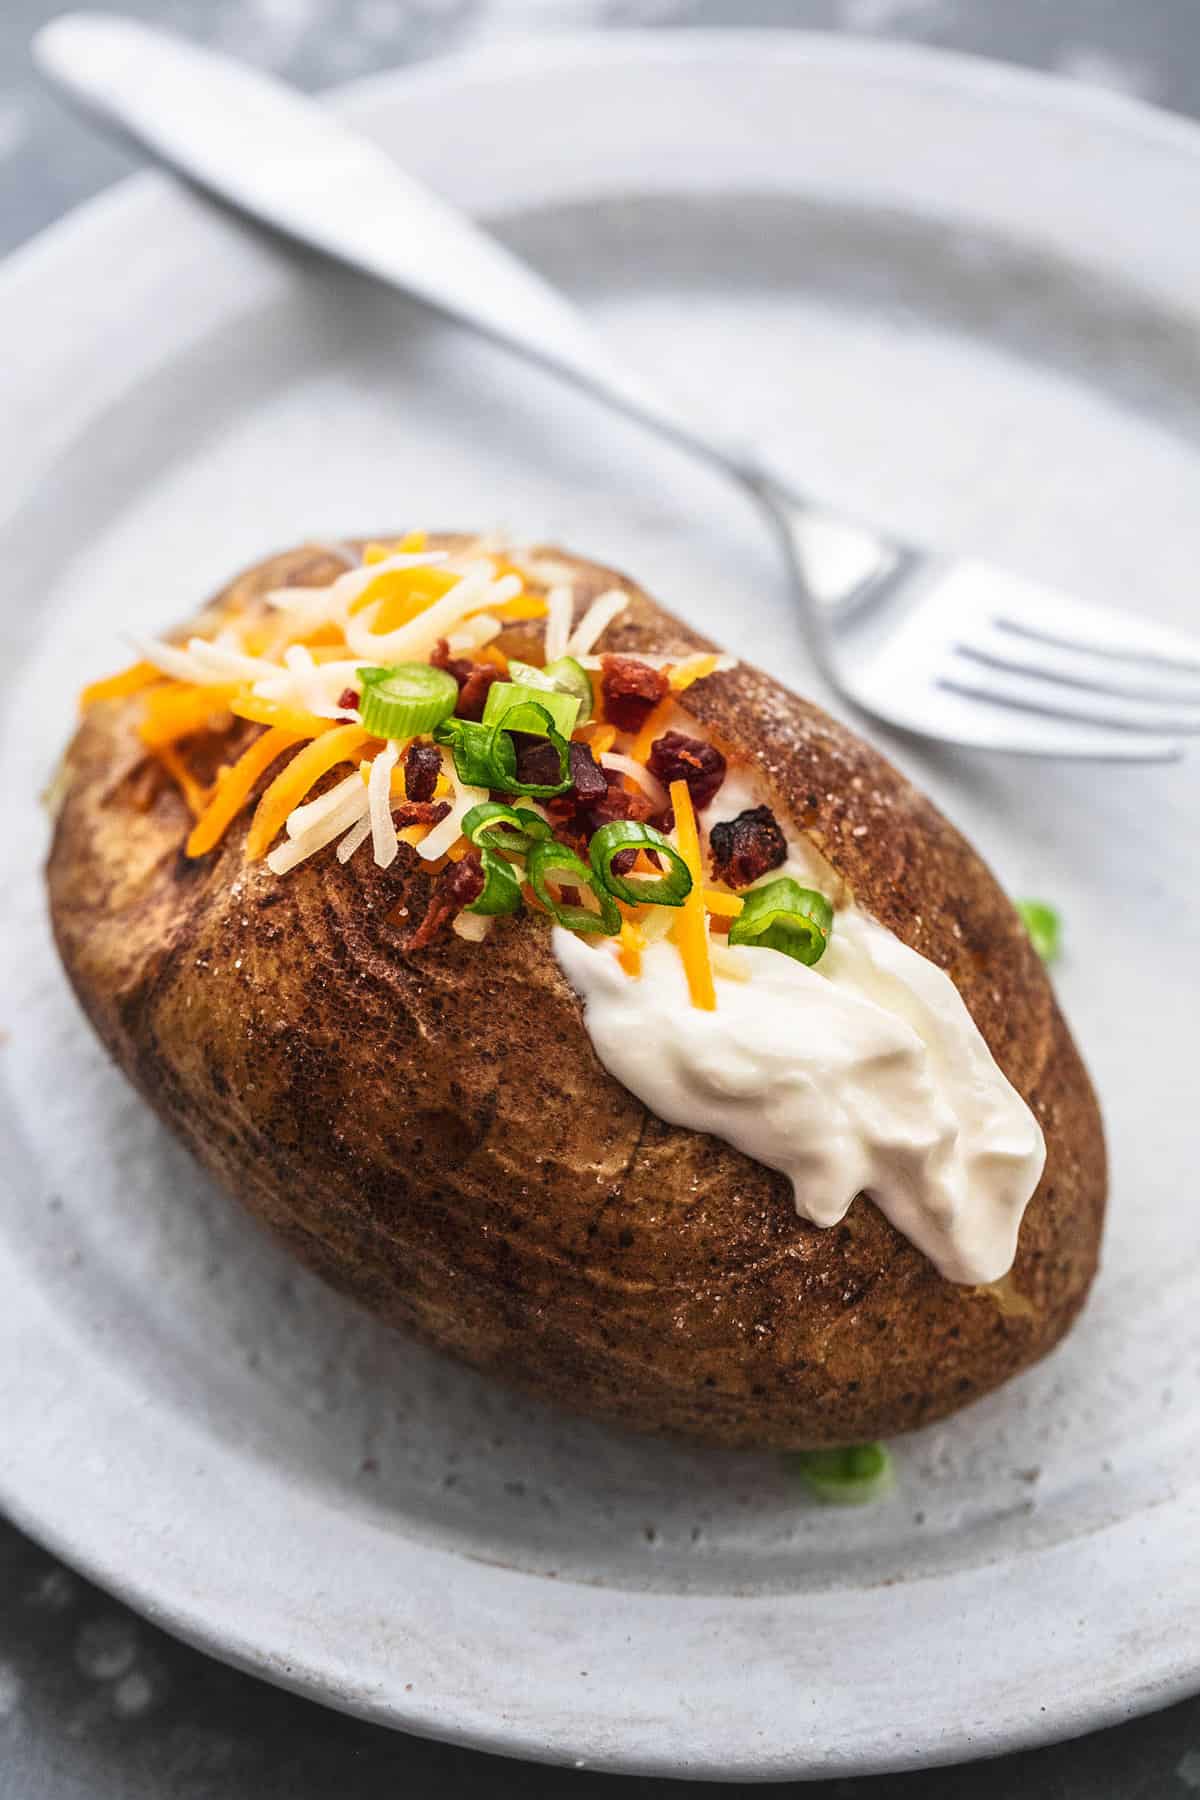 https://www.lecremedelacrumb.com/wp-content/uploads/2019/10/instant-pot-baked-potatoes-4sm-4.jpg